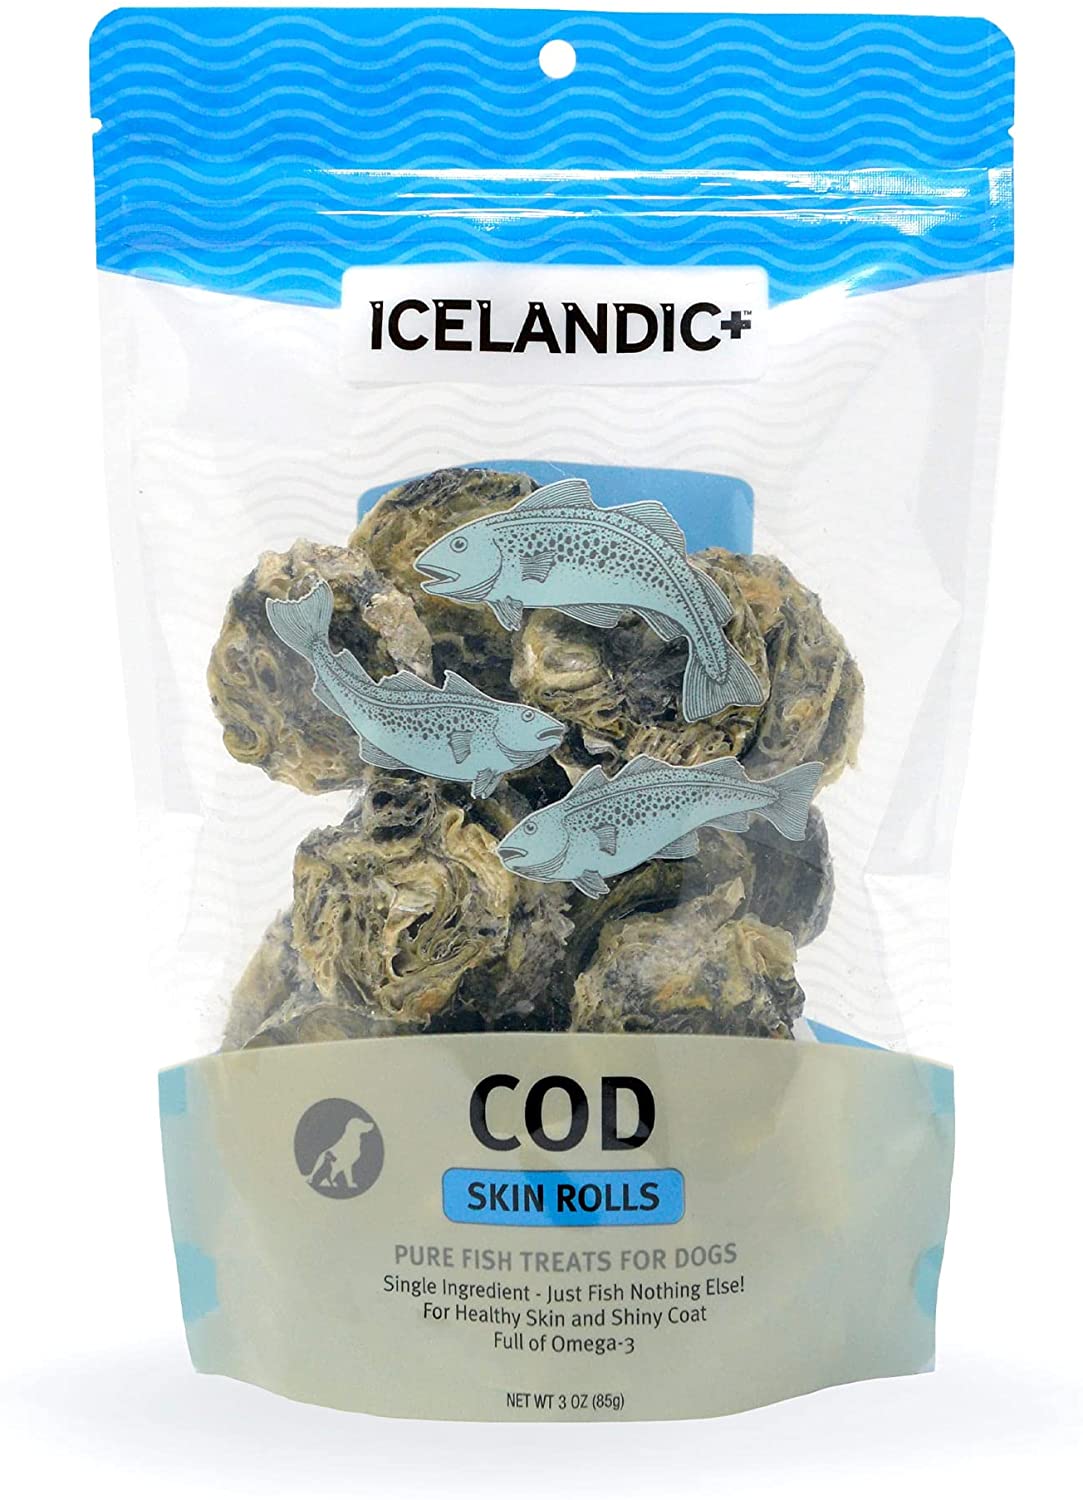 Icelandic+ All-Natural Dog Chew Treats Cod Skin Rolls